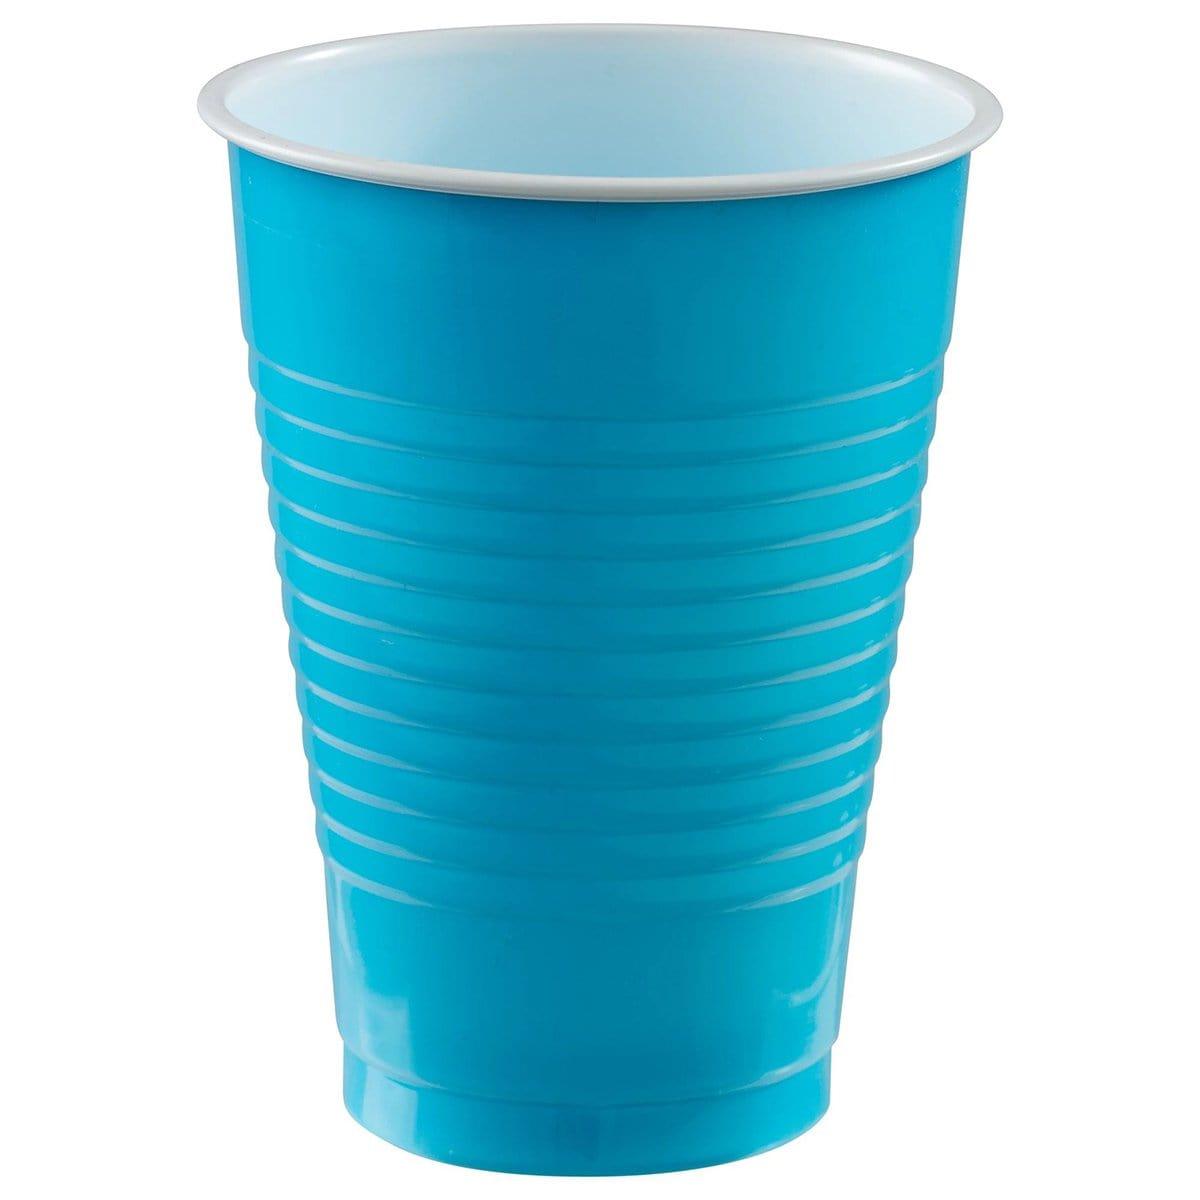 Buy plasticware Plastic Cups 12Oz. 20/Pkg - Caribbean Blue sold at Party Expert